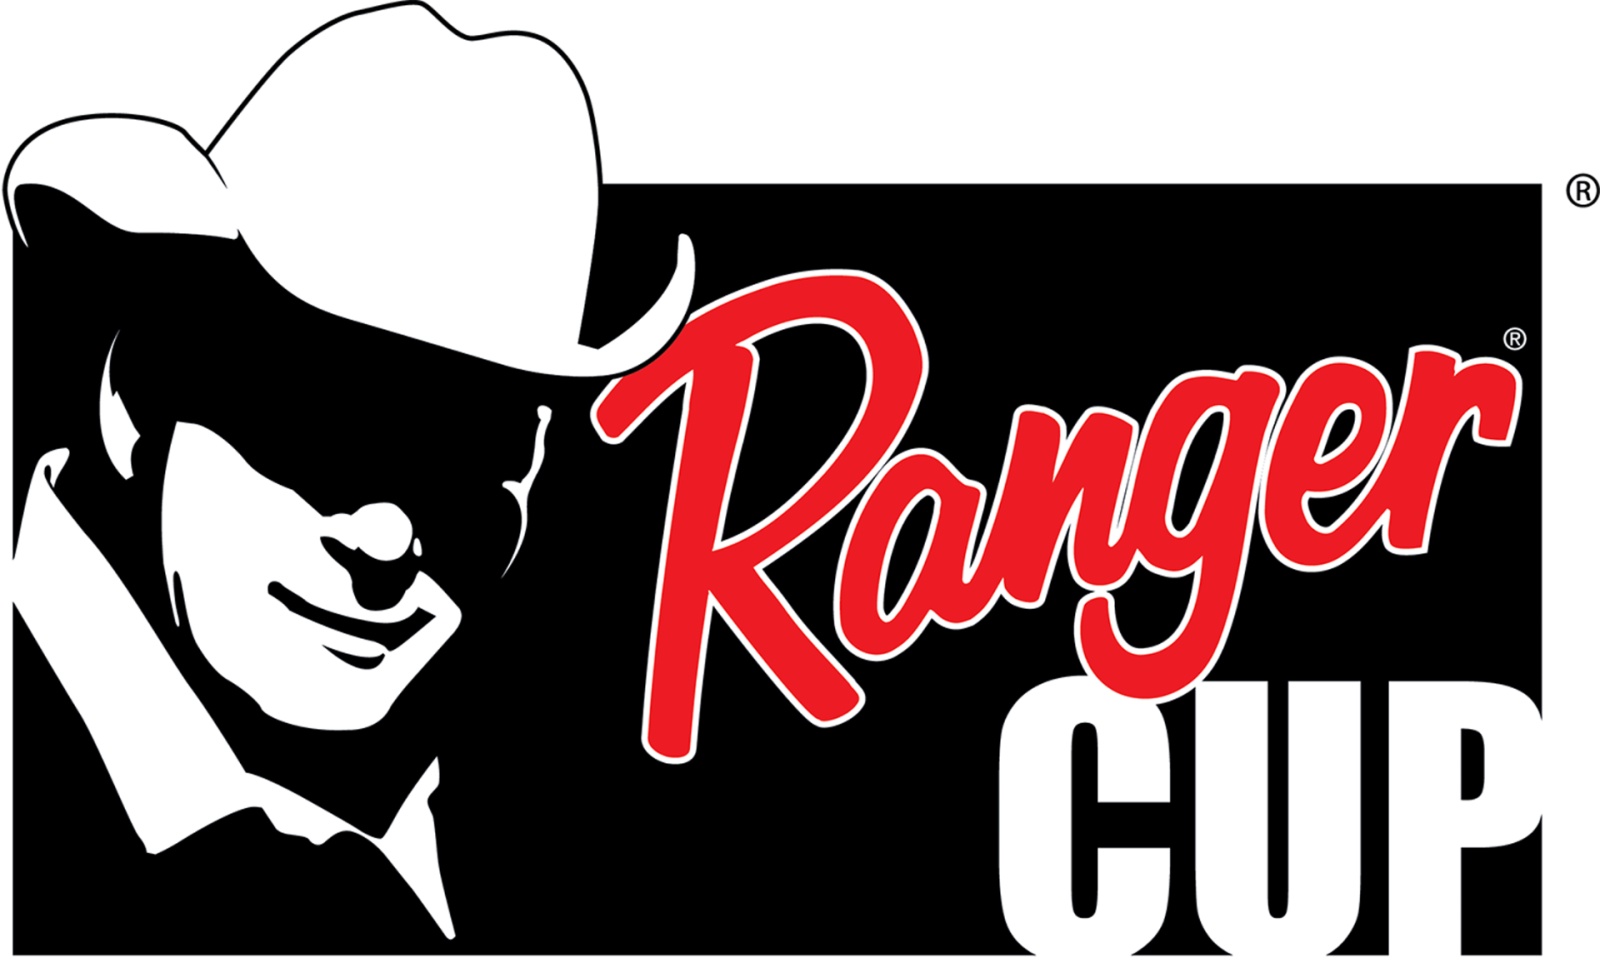 Ranger Cup Series